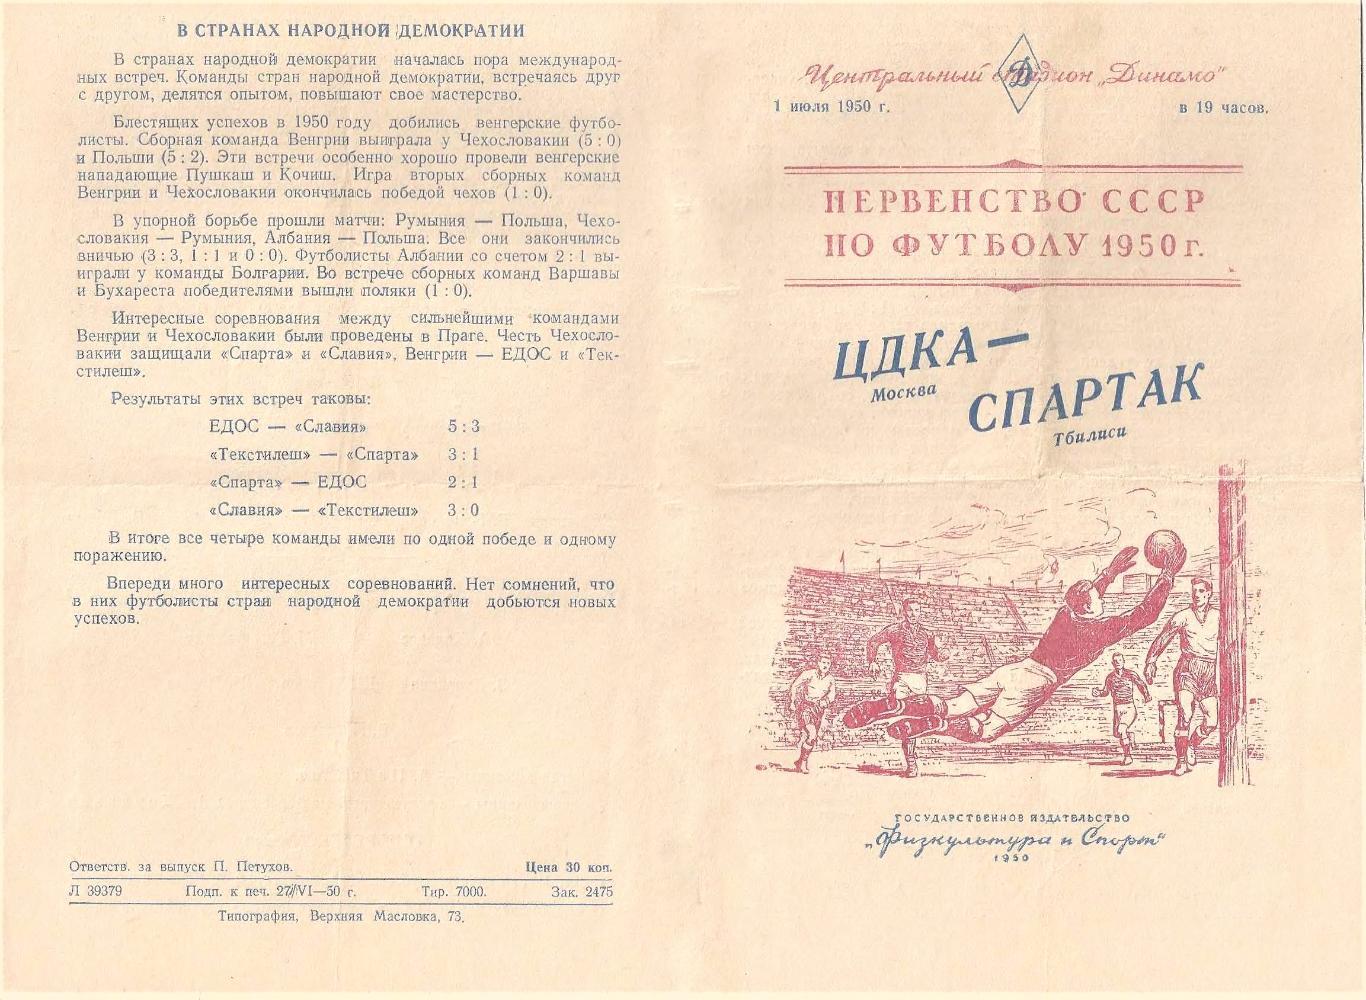 01.07.1950. ЦДКА - Спартак (Тбилиси) - копия